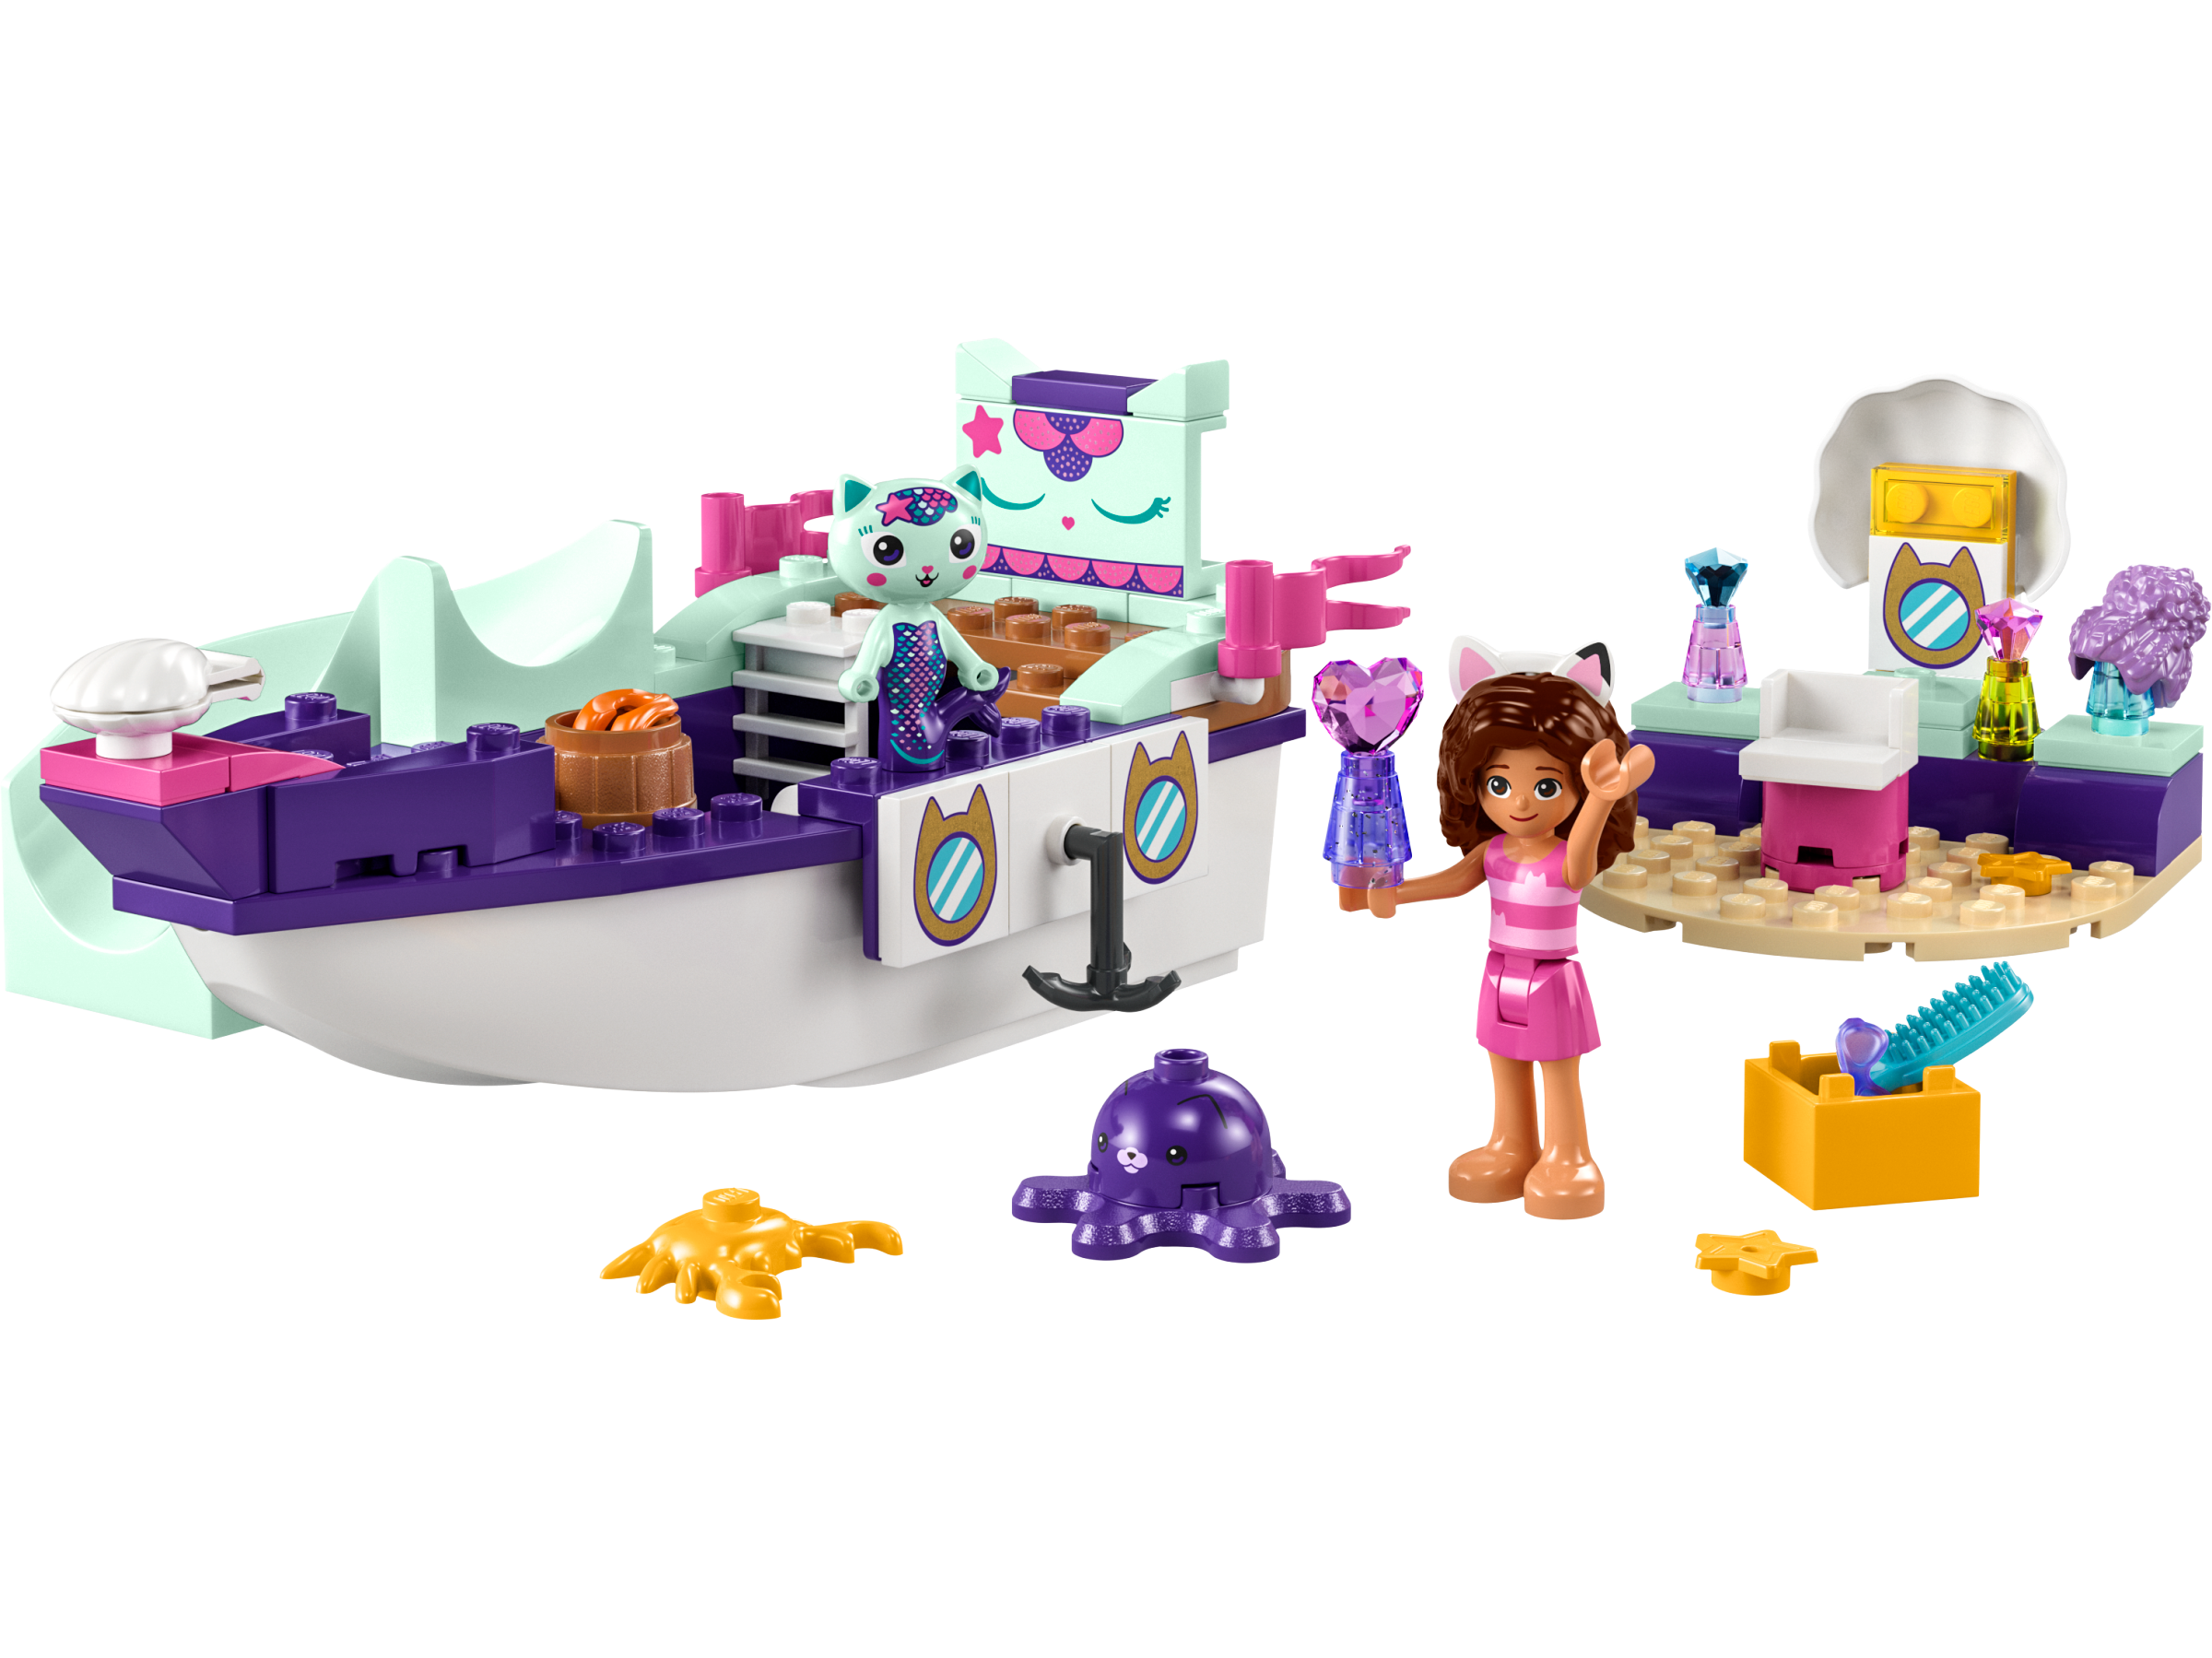 Gabby & MerCat's Ship & Spa 10786 | LEGO® Gabby's Dollhouse | Buy online at  the Official LEGO® Shop FR